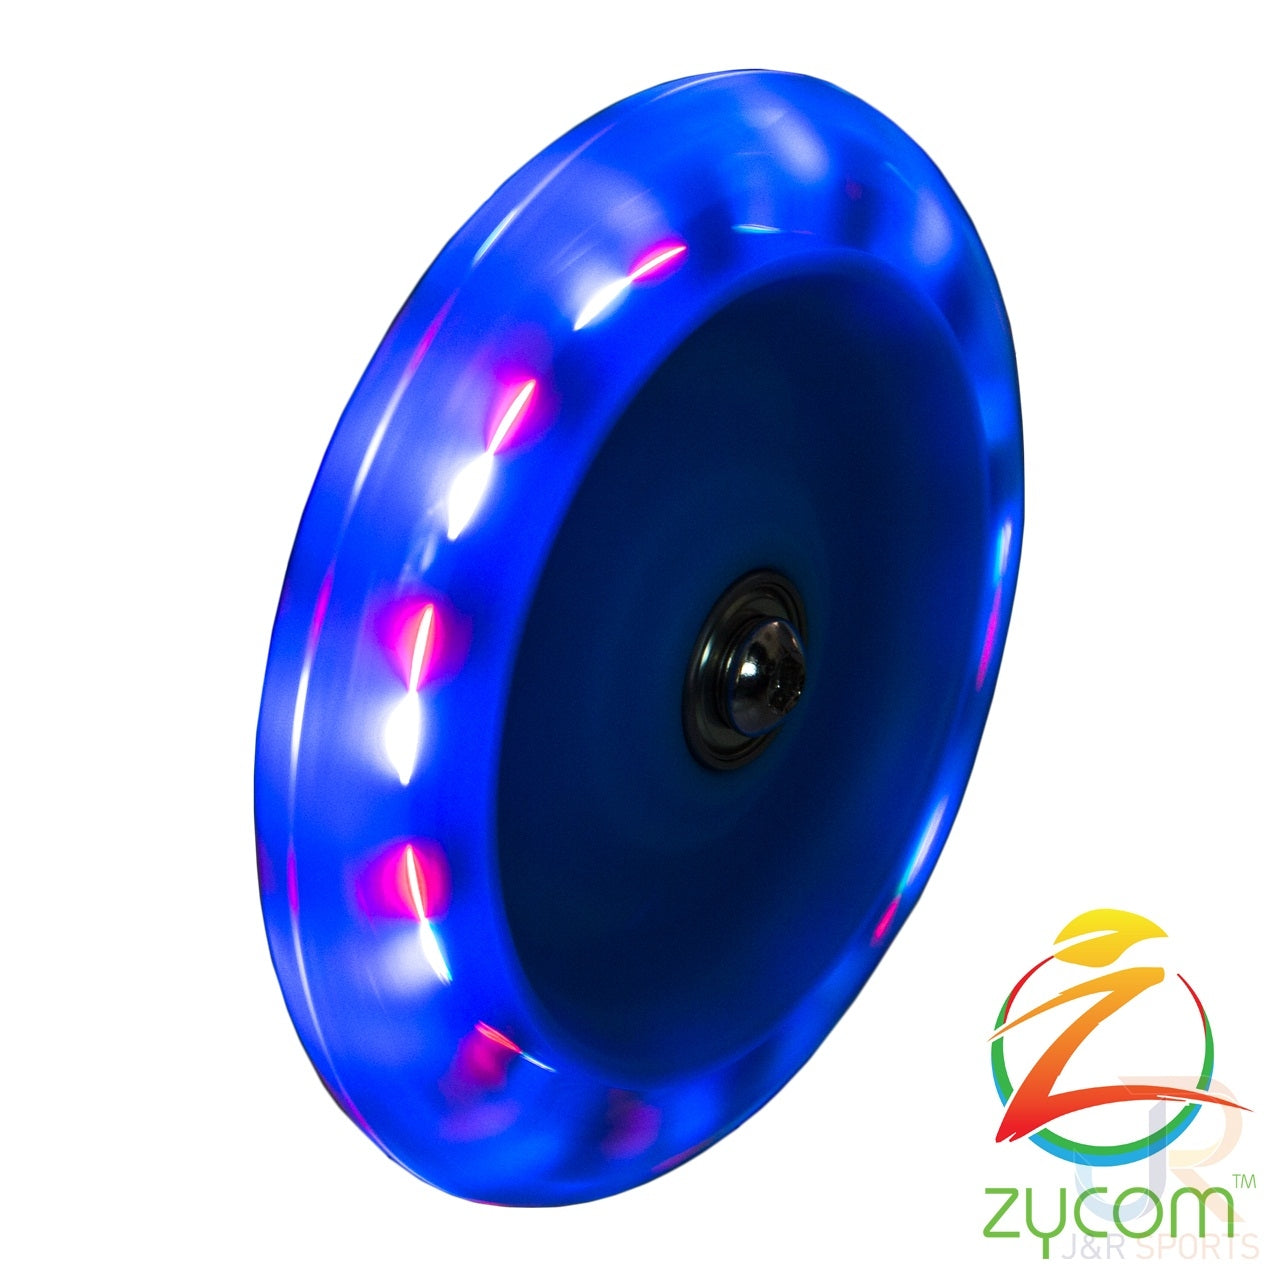 Zycom 125mm Light Up Front Scooter Wheel - Pink - Light Up